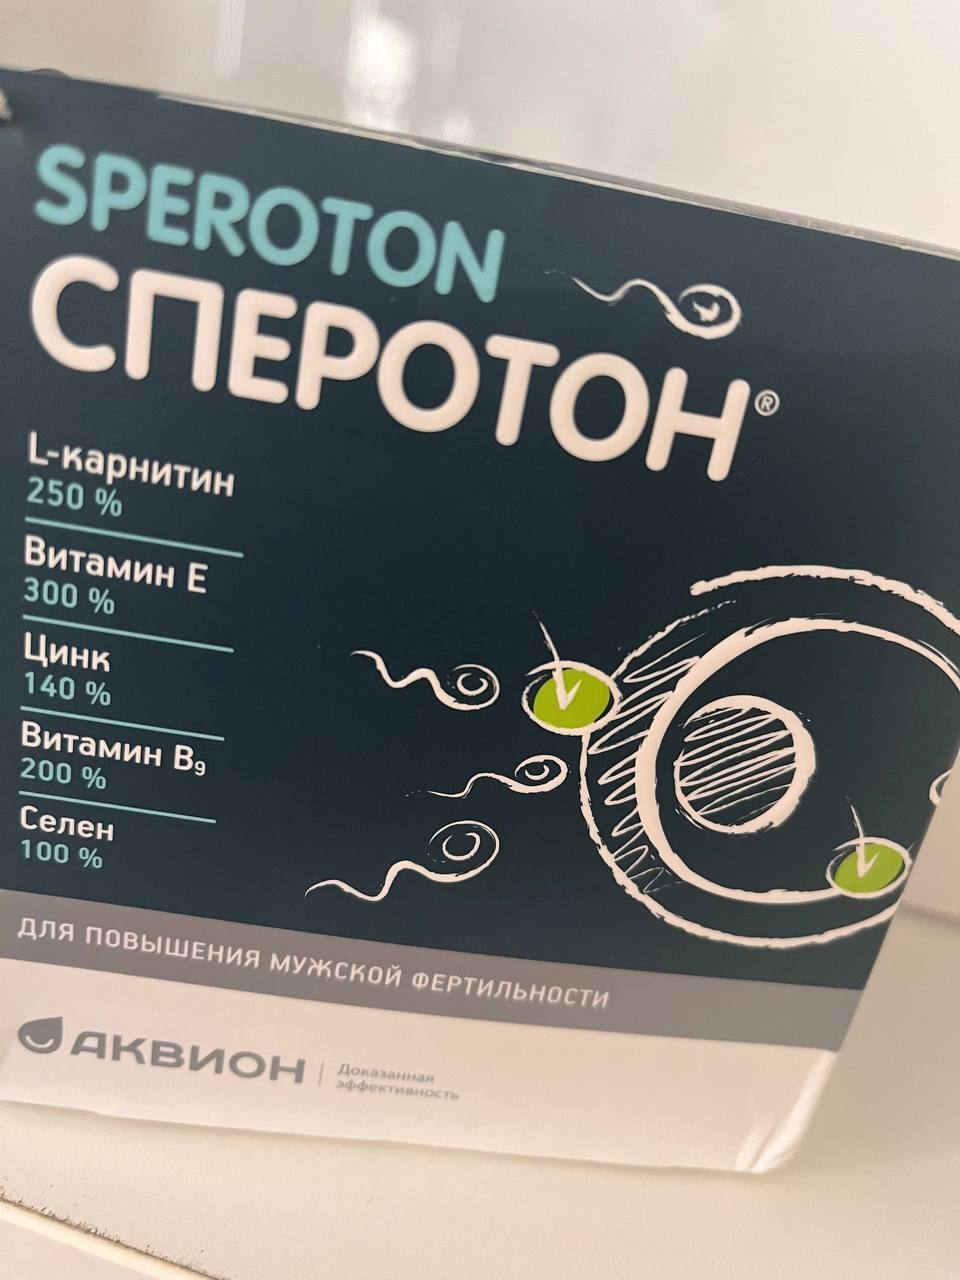 Сперотон отзывы мужчин. Сперотон. Сперотон для женщин. Сперотон капсулы. Сперотон порошок для мужчин и женщин.